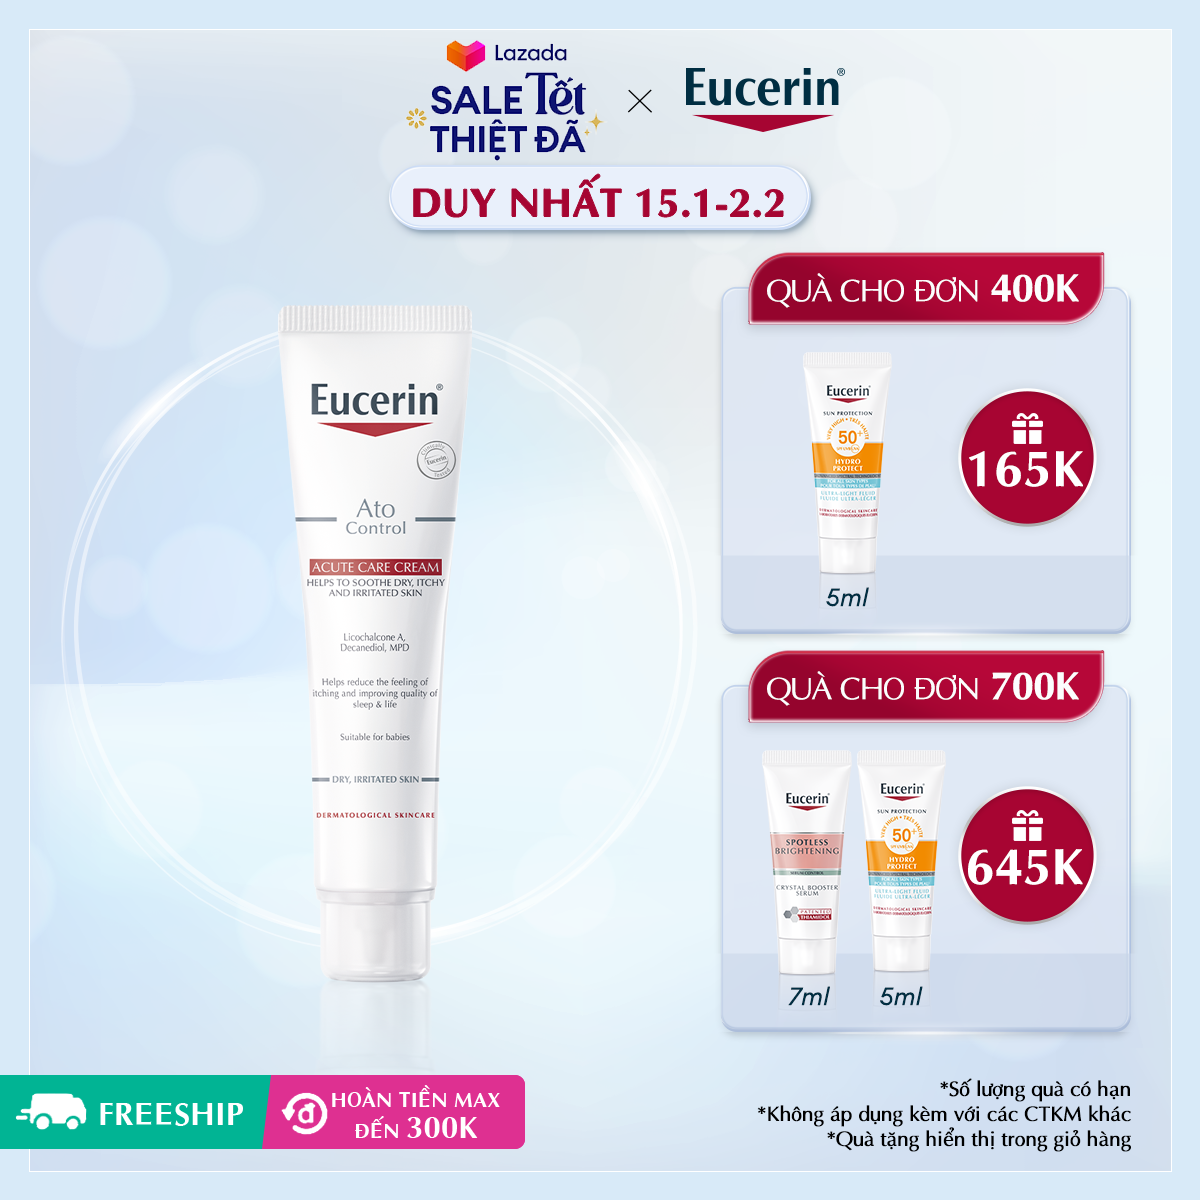 Kem dưỡng làm dịu da giai đoạn bùng phát Eucerin Ato Control Acute Care Cream 40ml